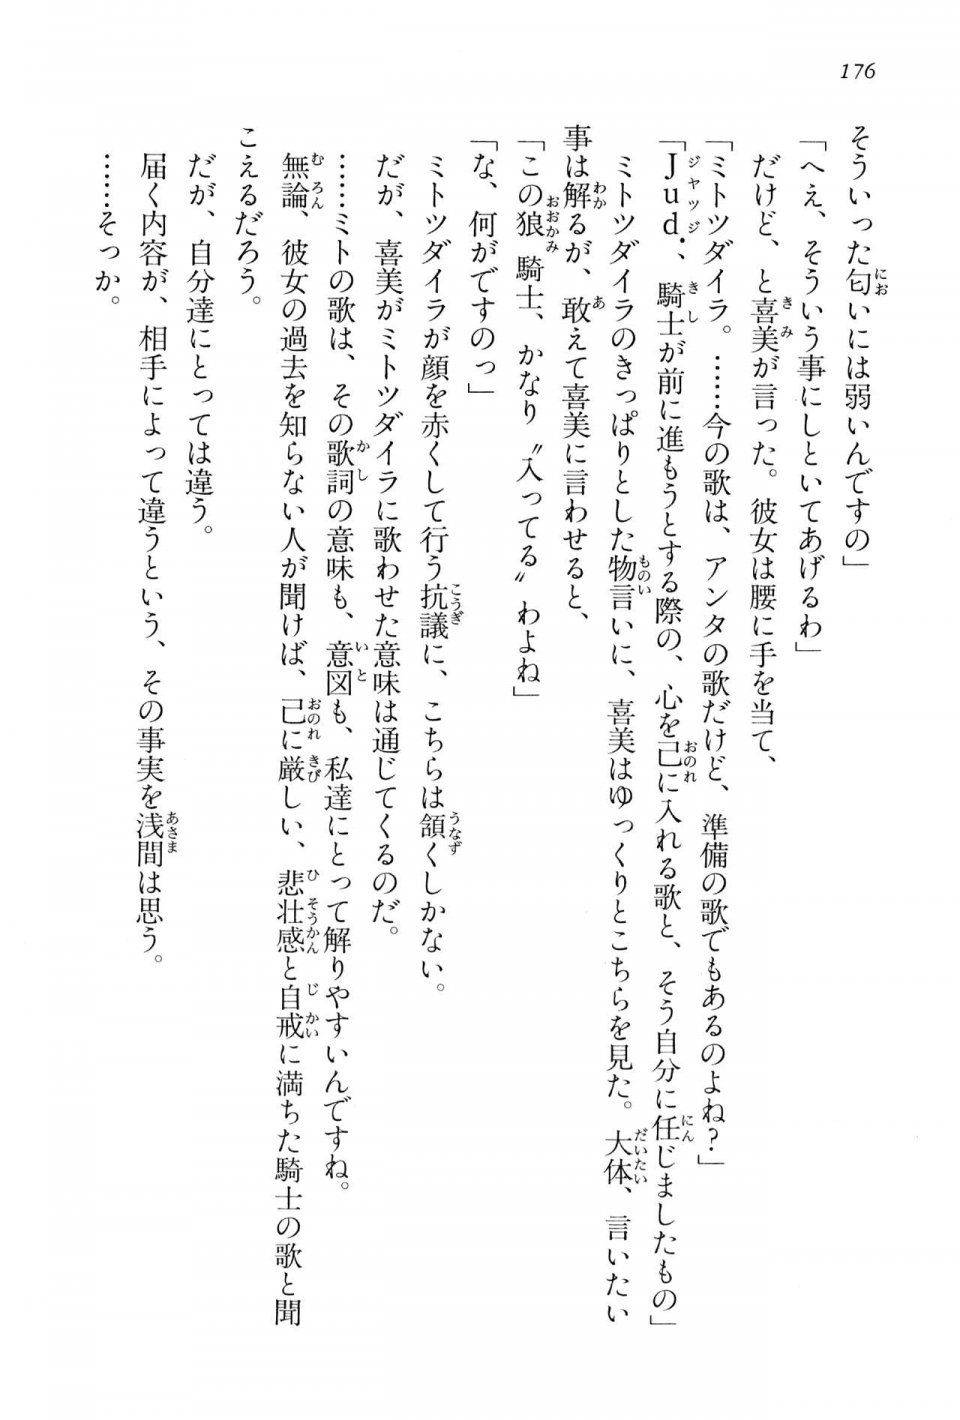 Kyoukai Senjou no Horizon BD Special Mininovel Vol 2(1B) - Photo #180